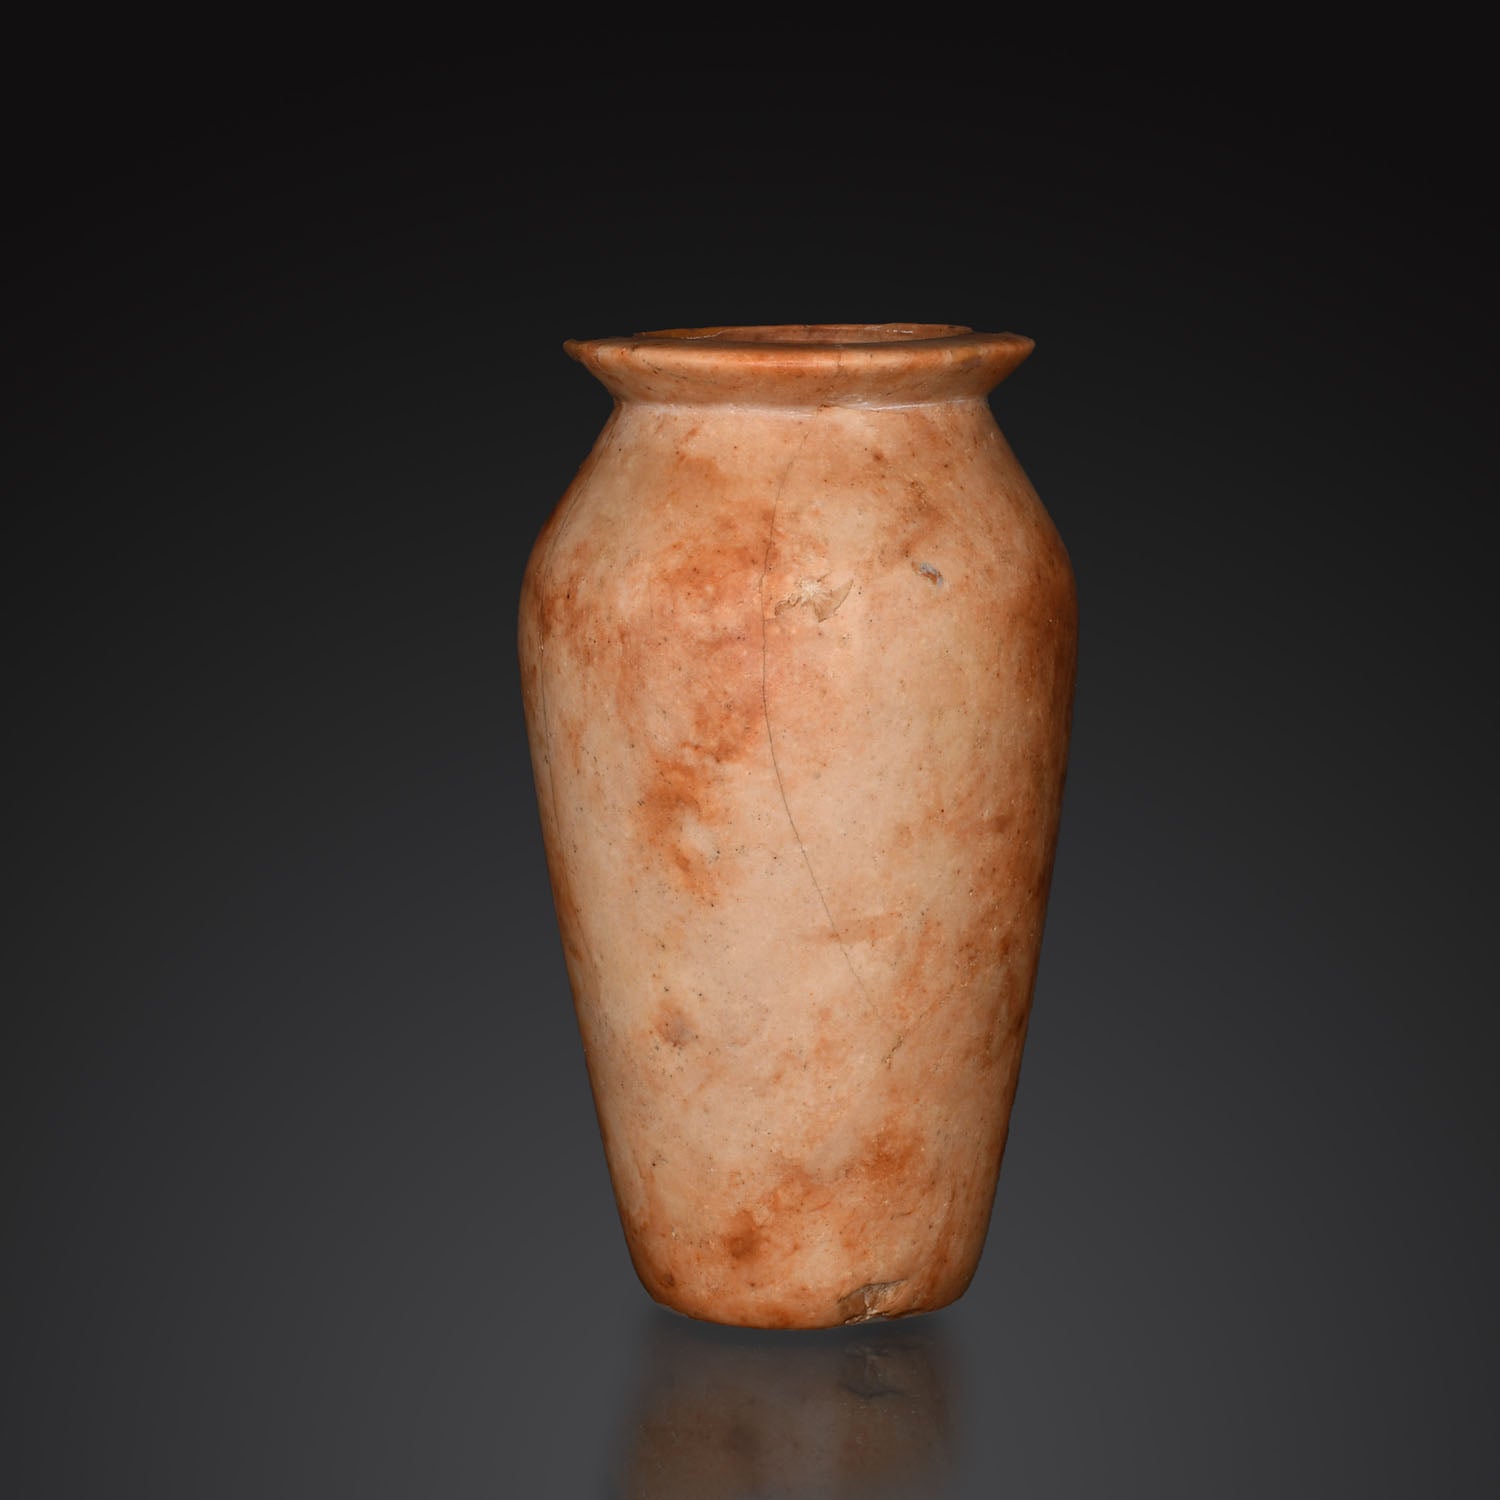 An Egyptian Red Limestone Ointment Vessel, Middle Kingdom, Dynasty 12, ca. 2000 - 1800 BCE